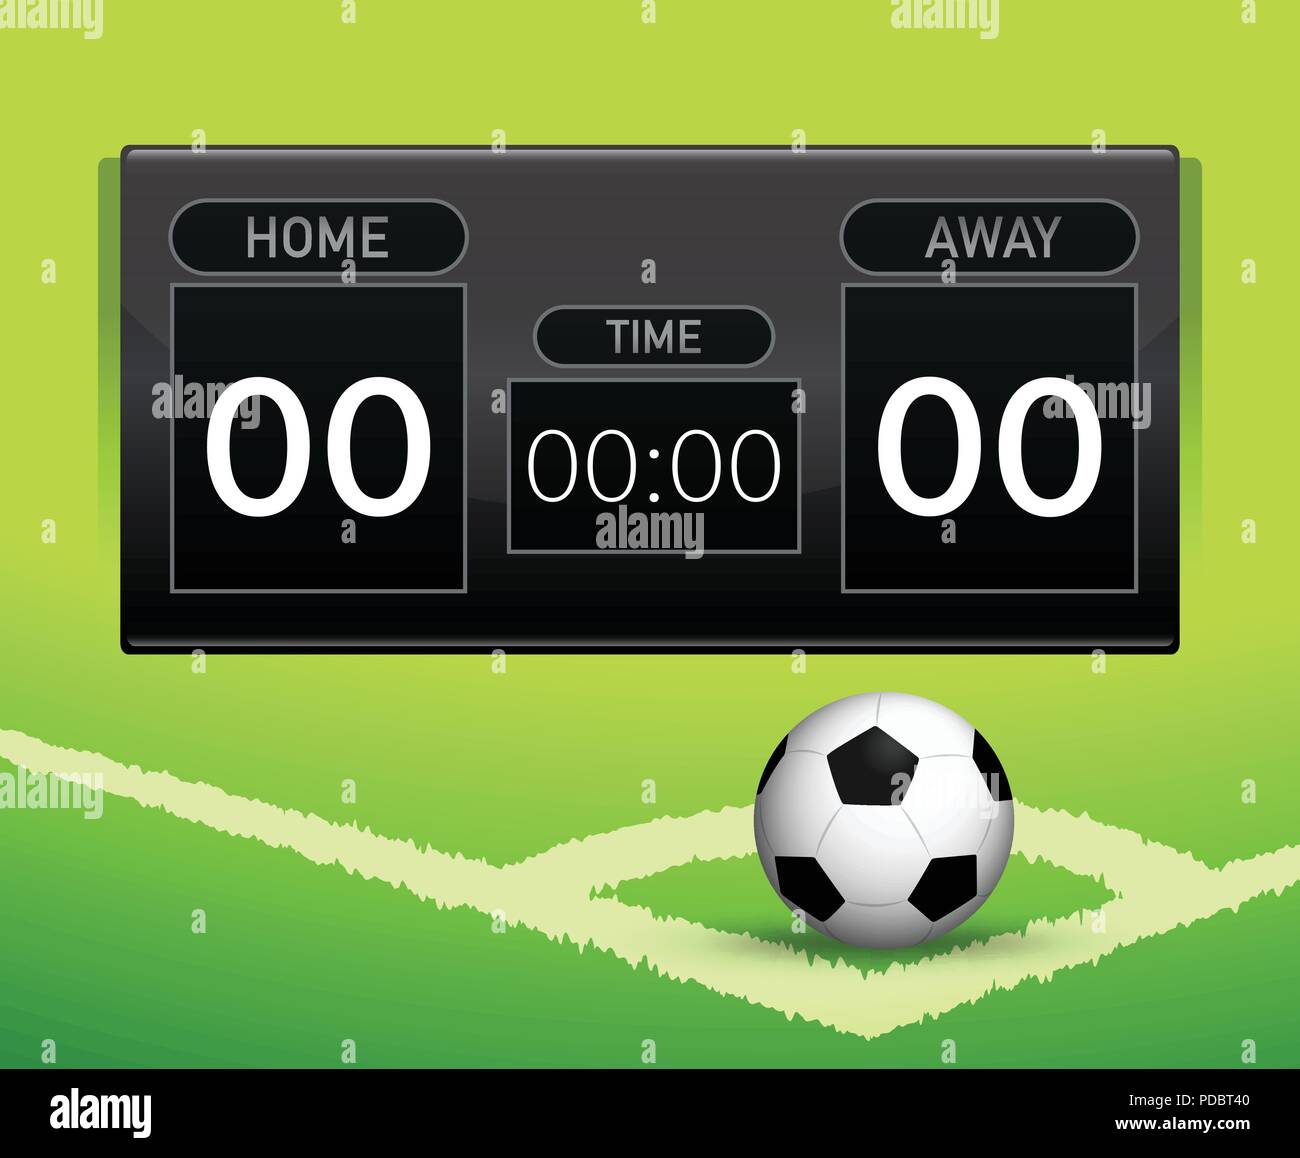 Soccer score board concept Stock Image & Art - Alamy